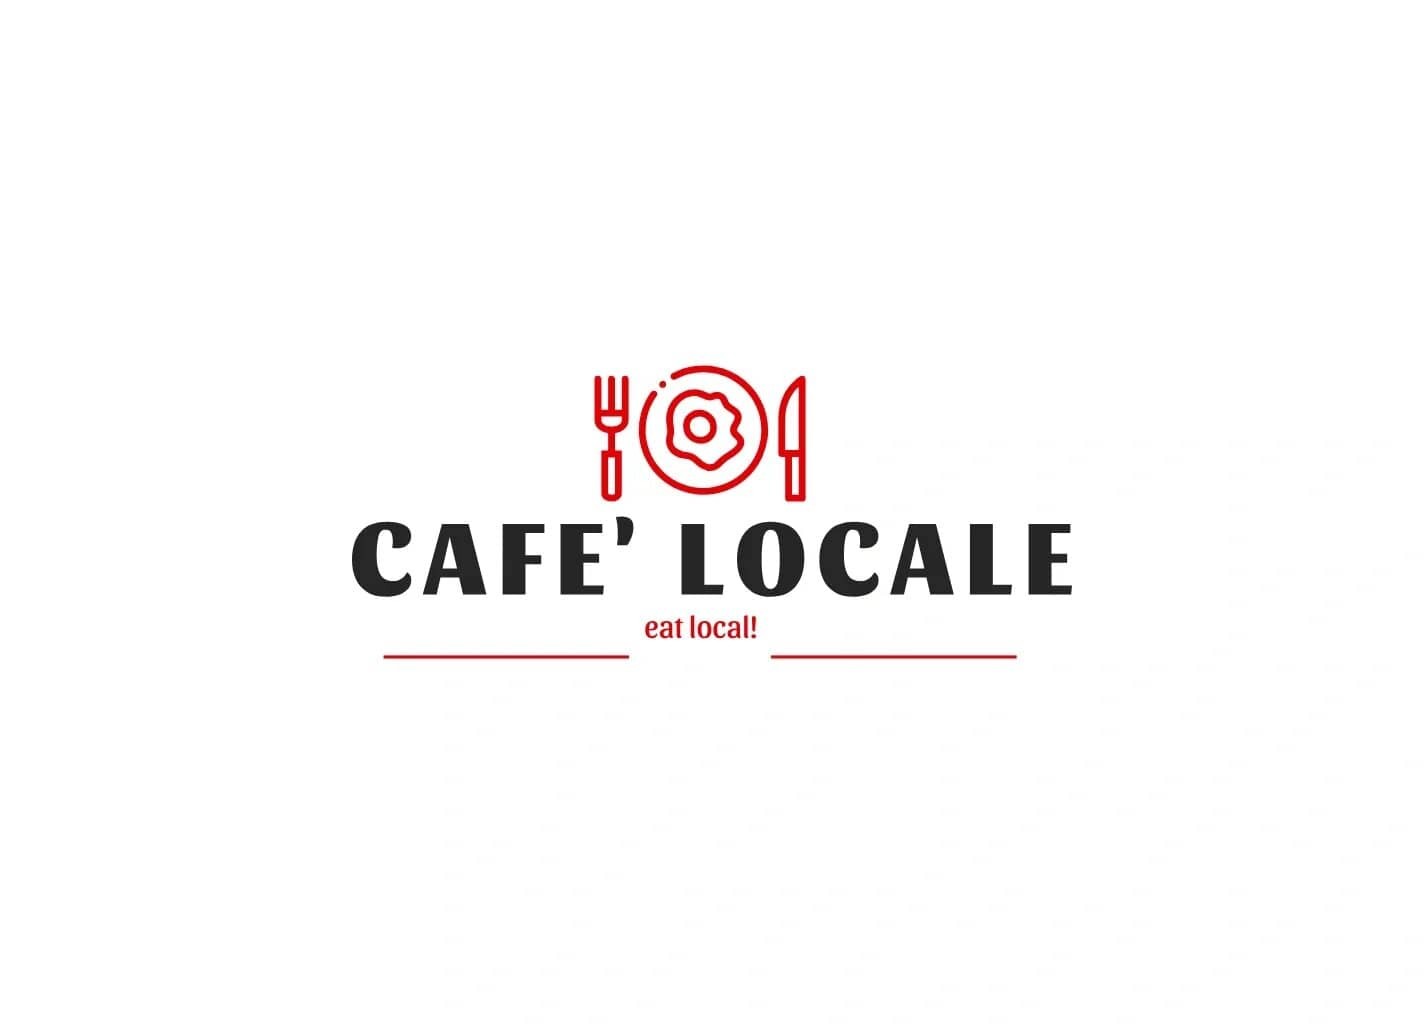 Cafe Locale